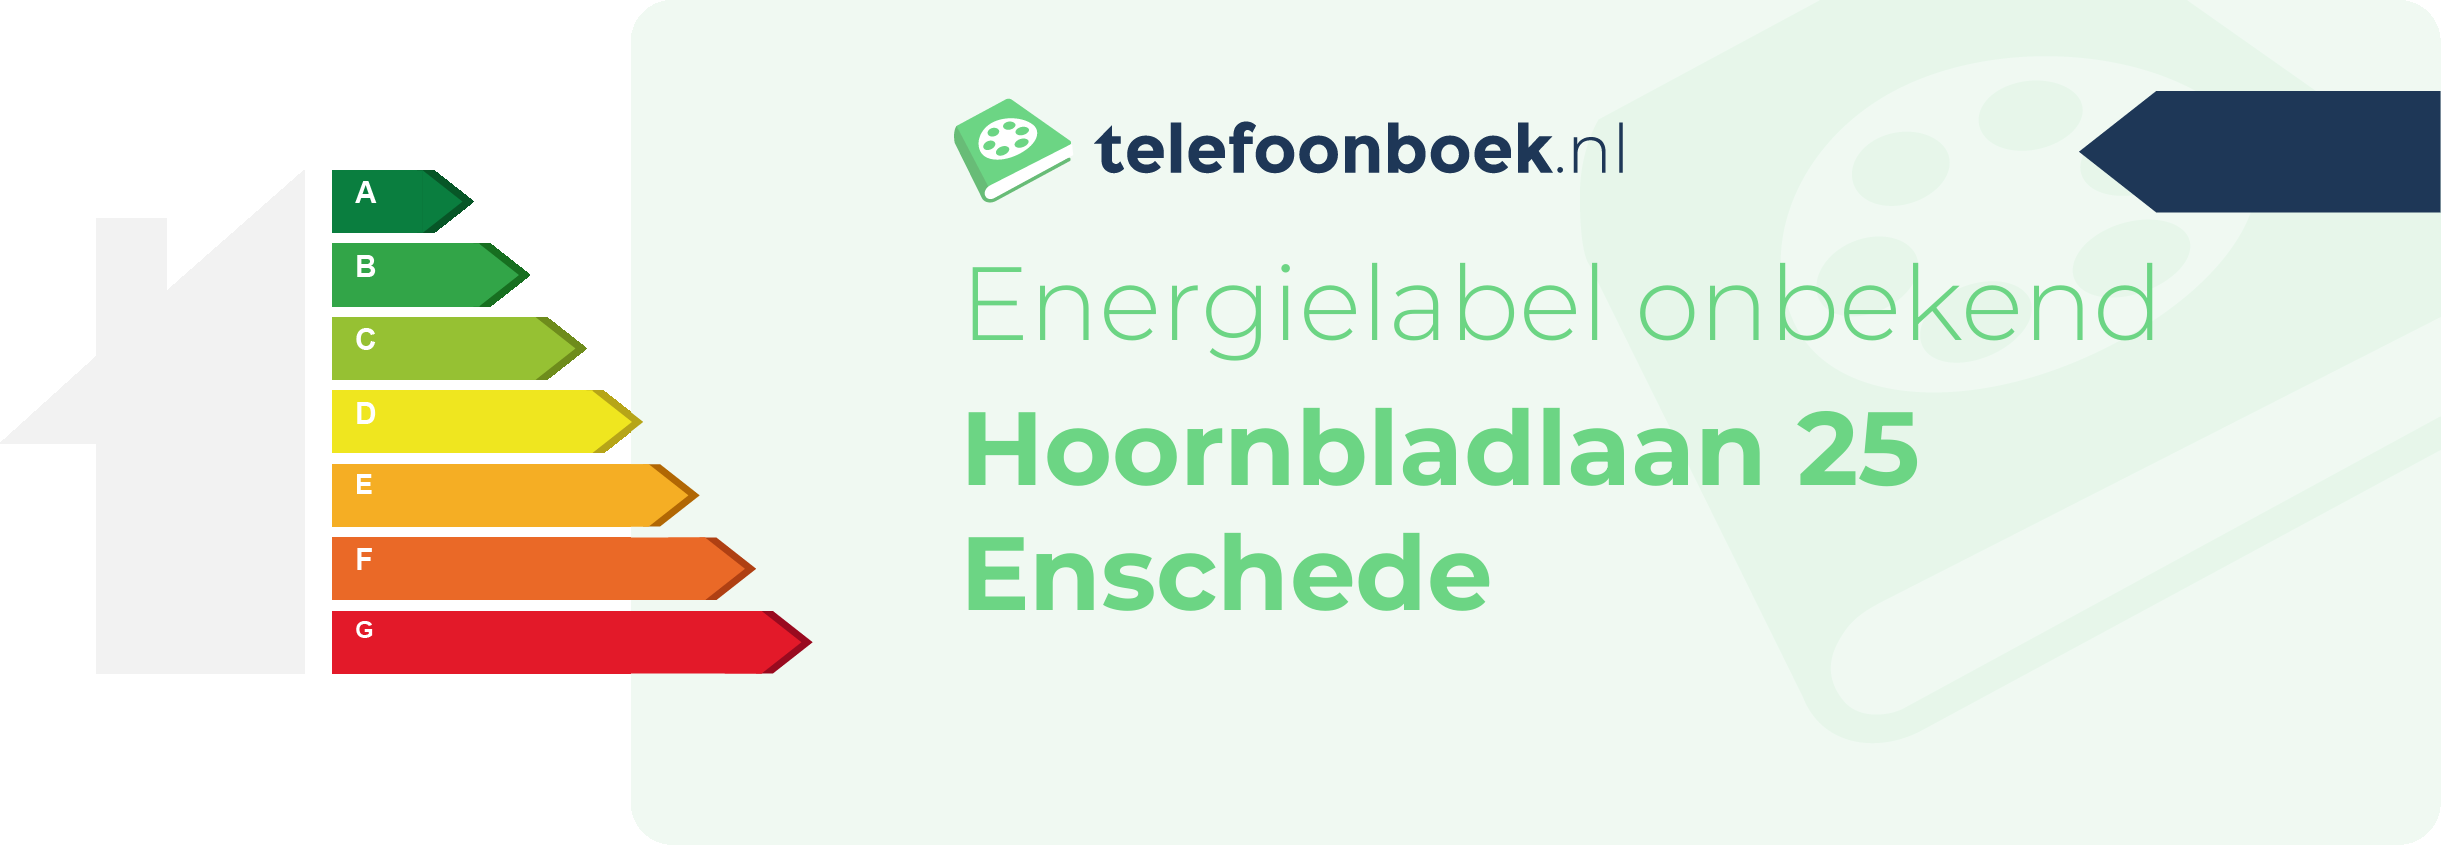 Energielabel Hoornbladlaan 25 Enschede